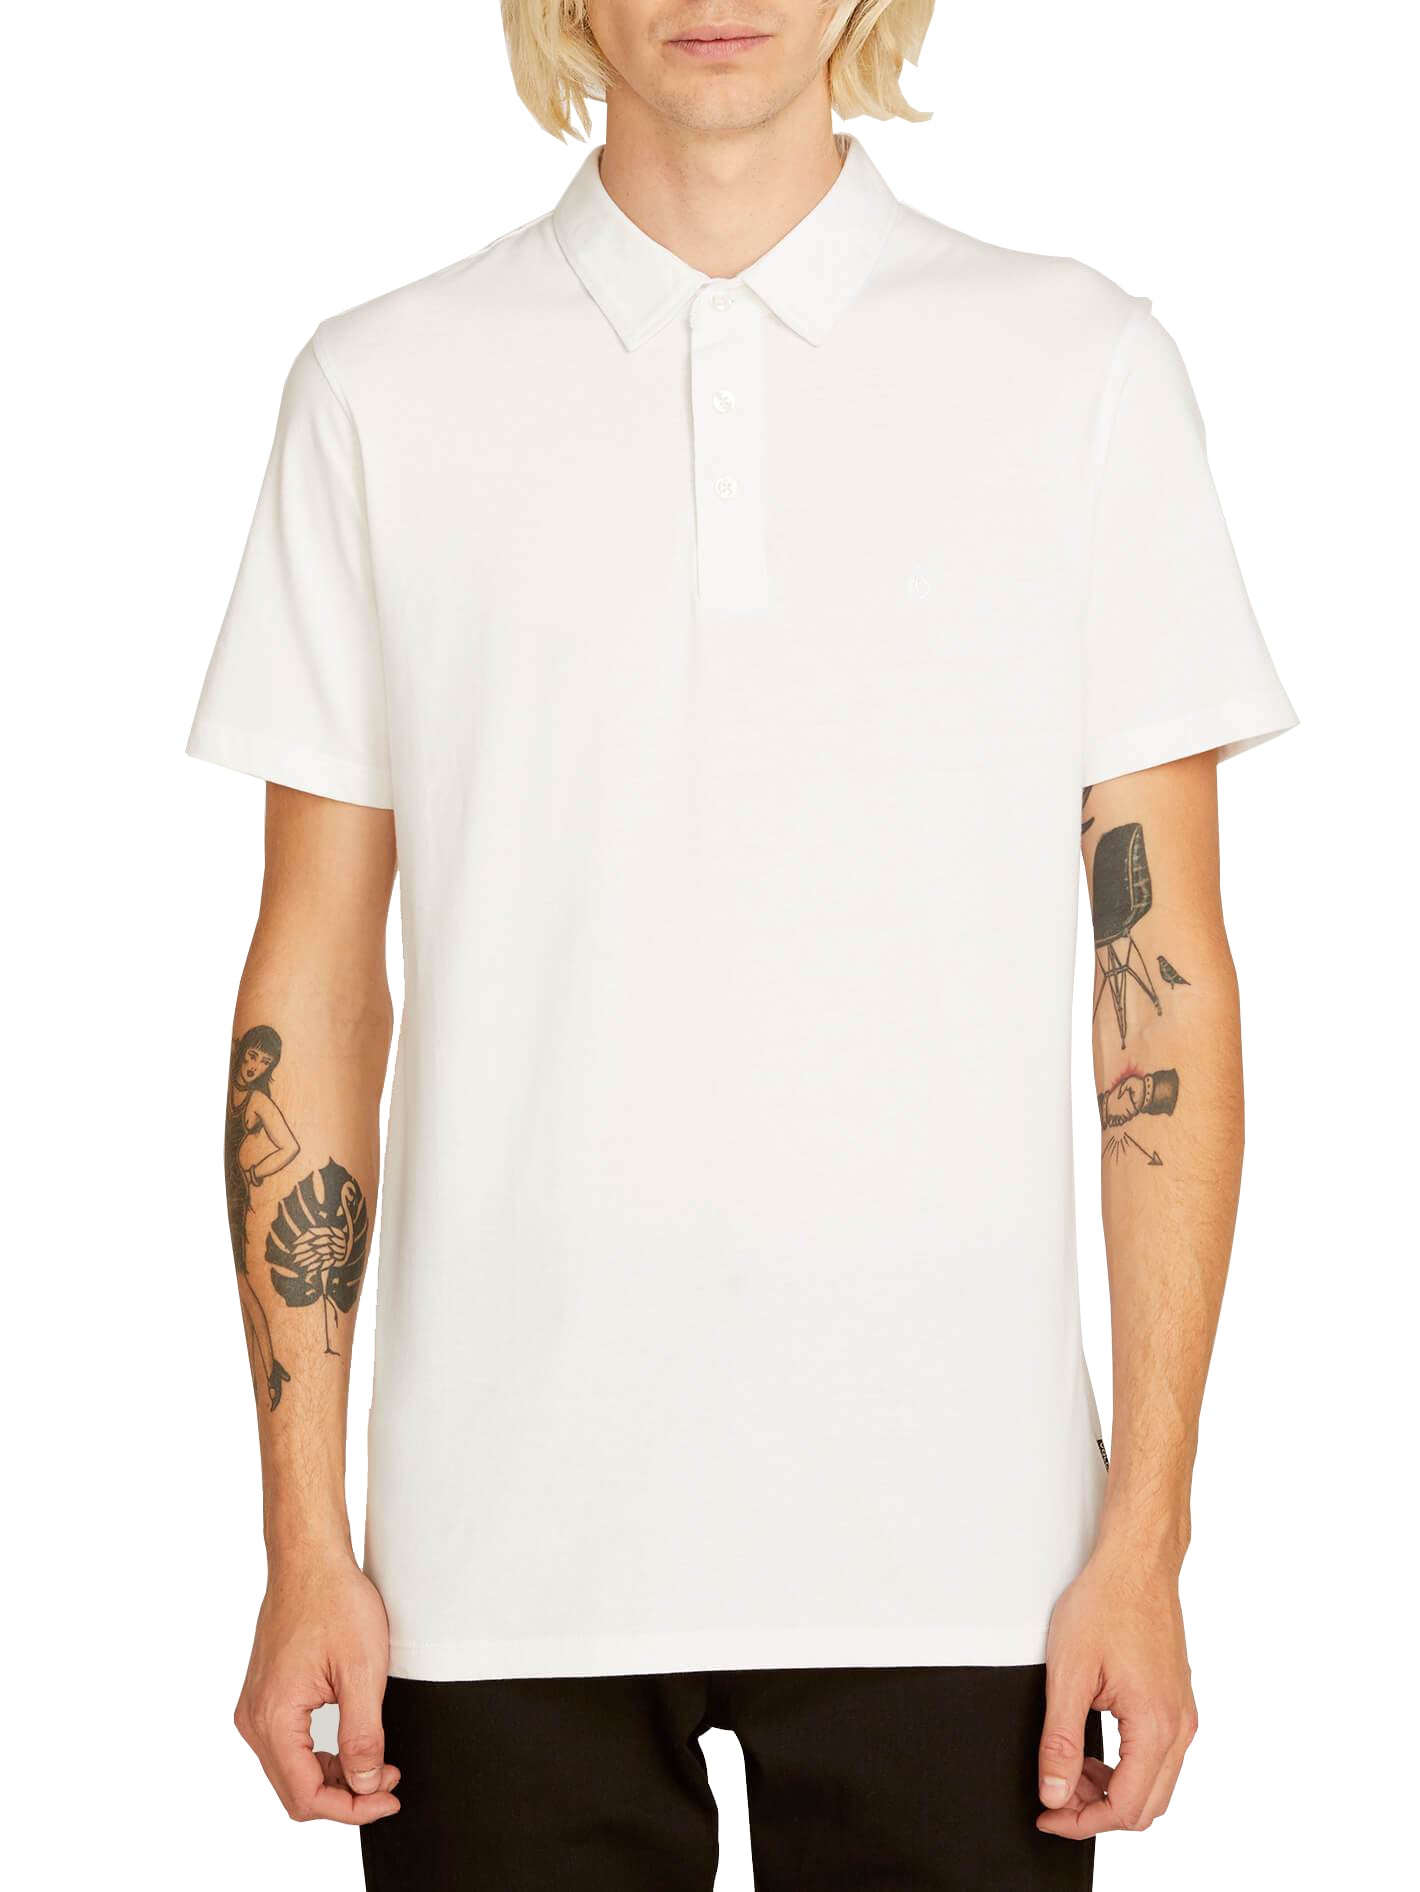 Volcom Wowzer Polo S/S Shirt White M